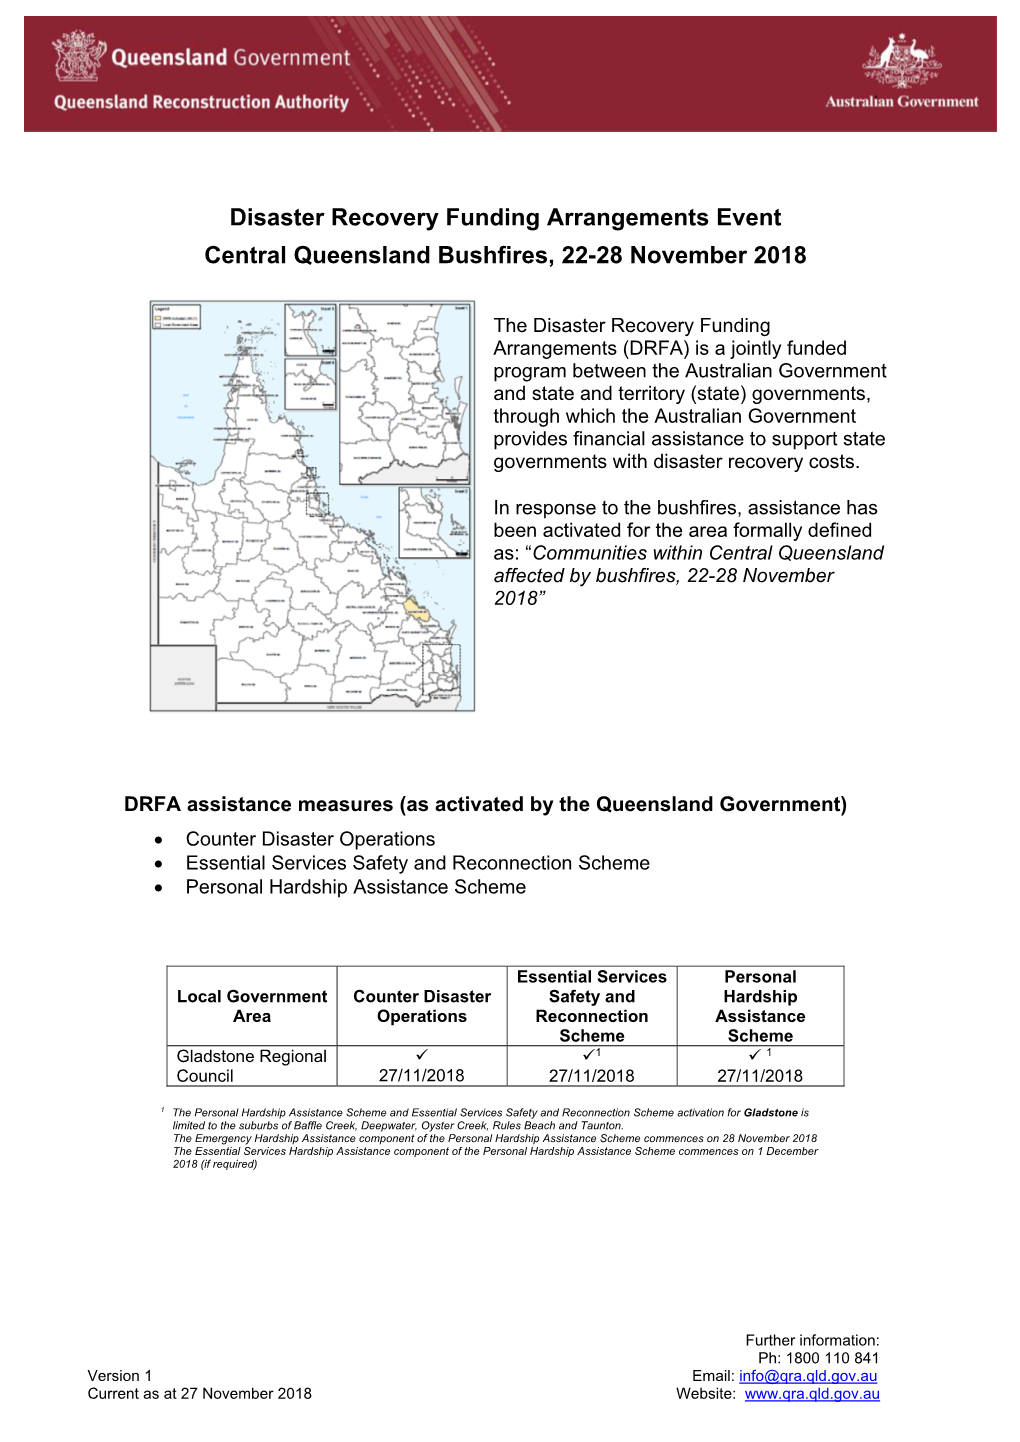 Disaster Recovery Funding Arrangements Event Central Queensland Bushfires, 22-28 November 2018